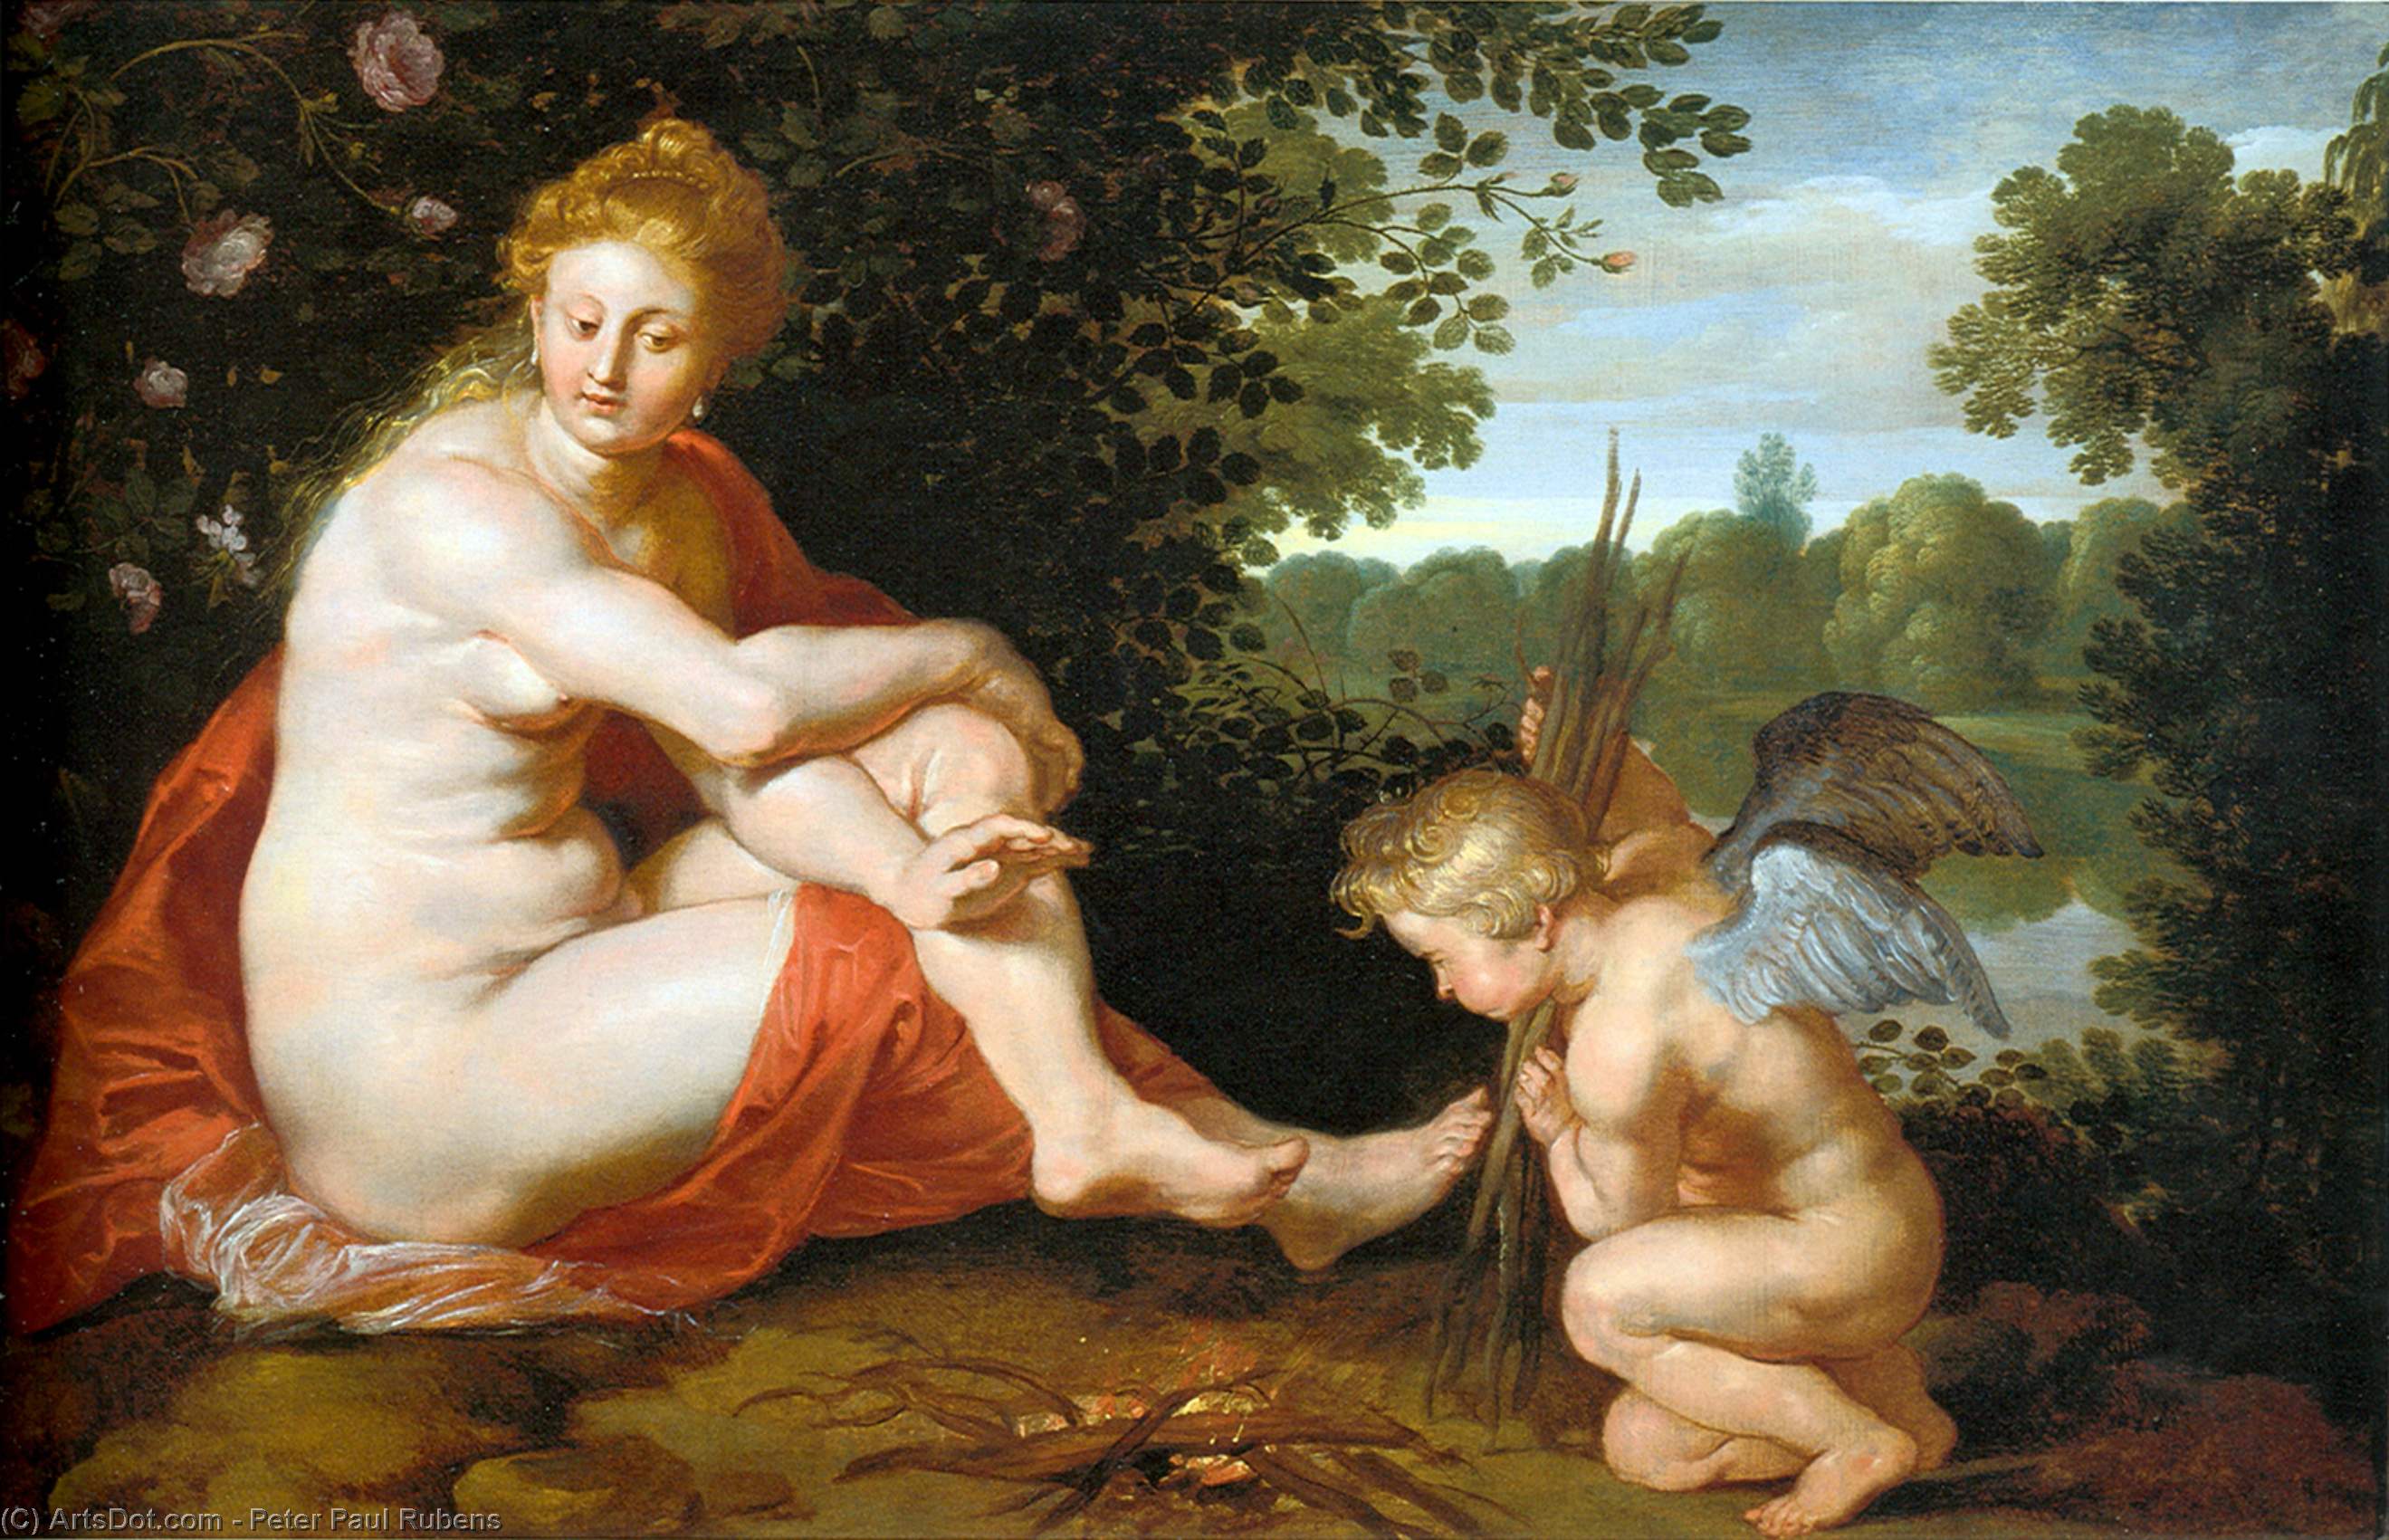 Wikioo.org – L'Enciclopedia delle Belle Arti - Pittura, Opere di Peter Paul Rubens - Sine Cerere et Baccho friget Venere